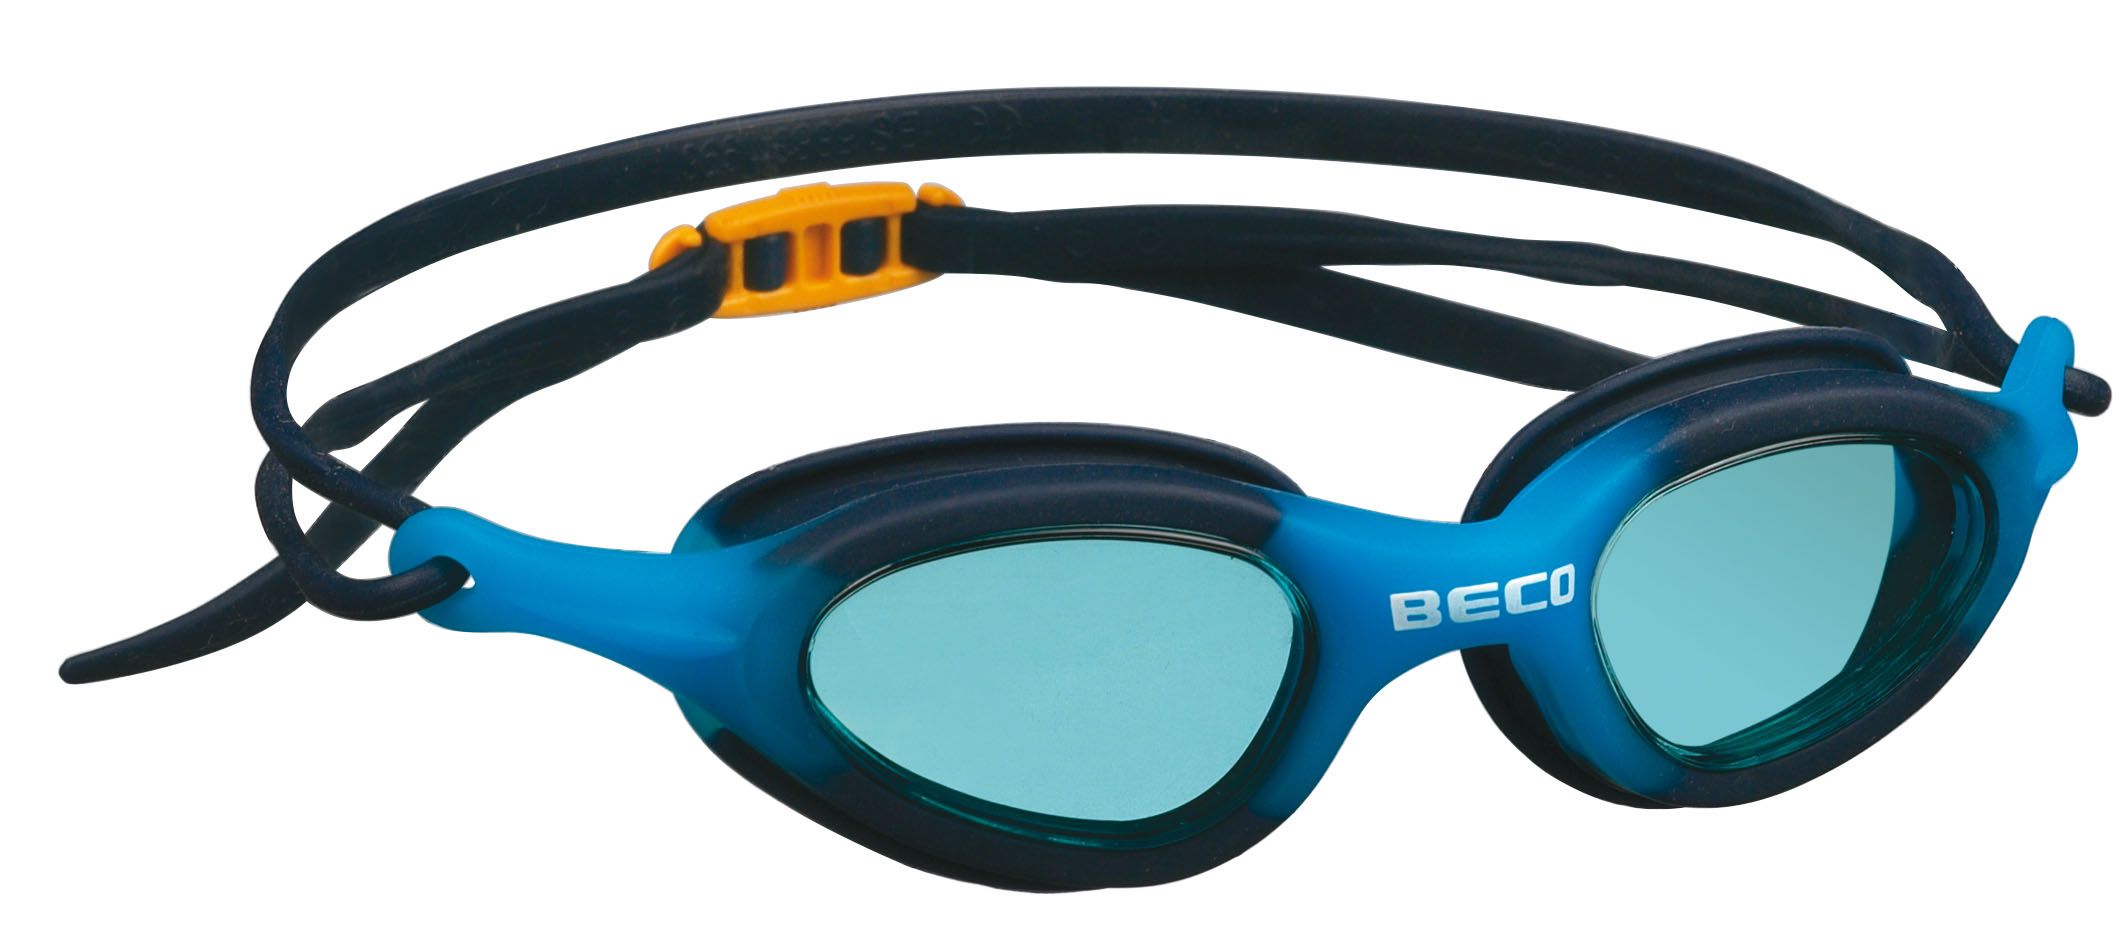 Beco Biarritz очки для плавания